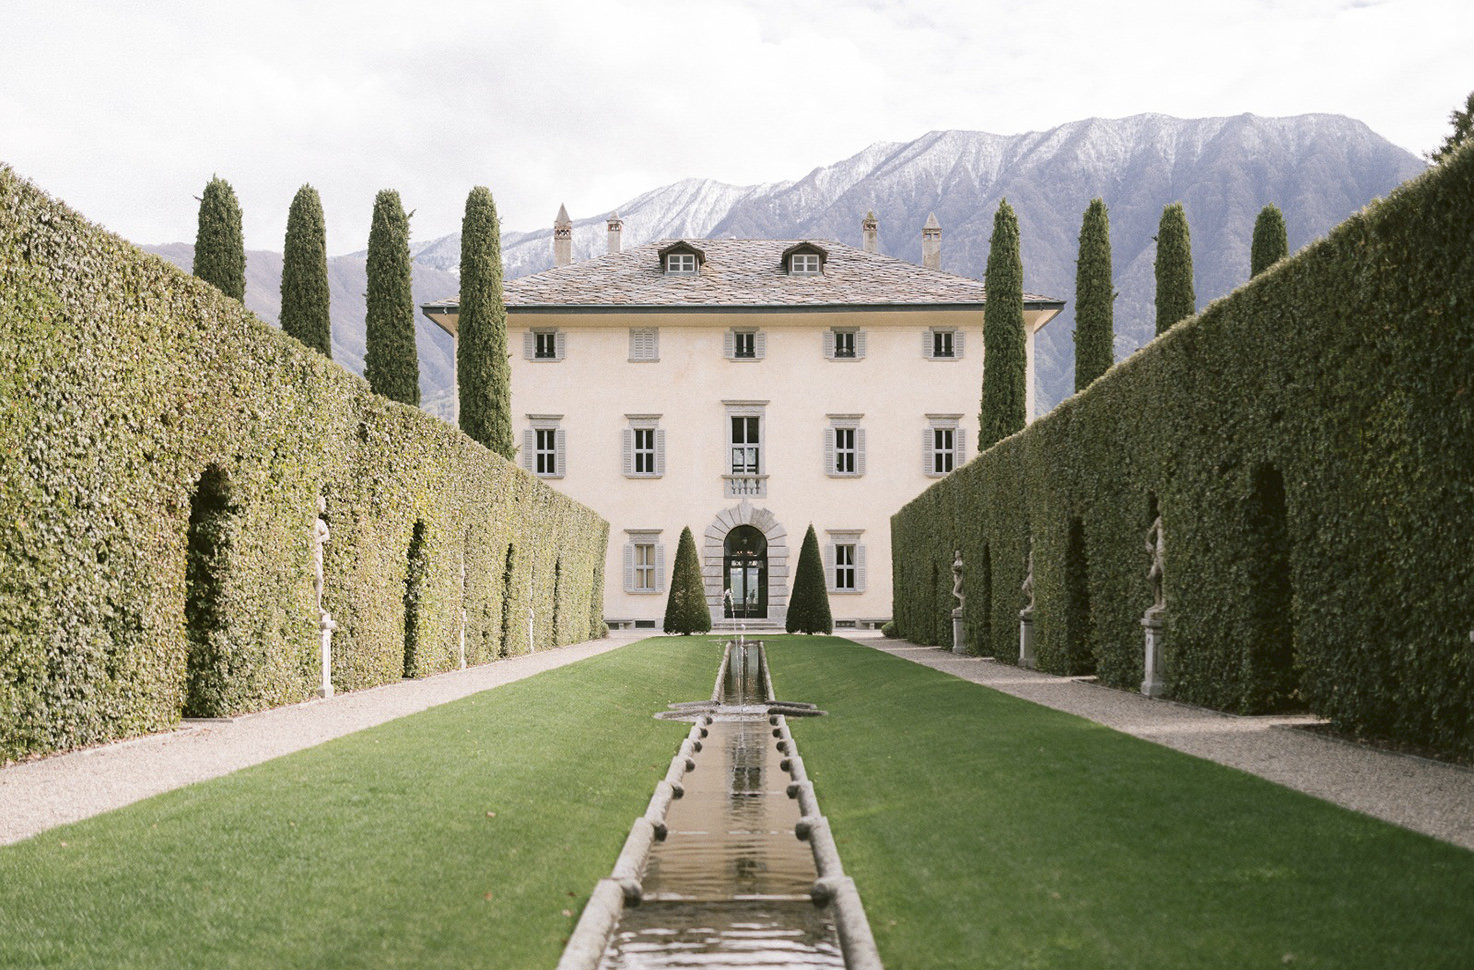 Villa Il Balbiano for weddings on Lake Como